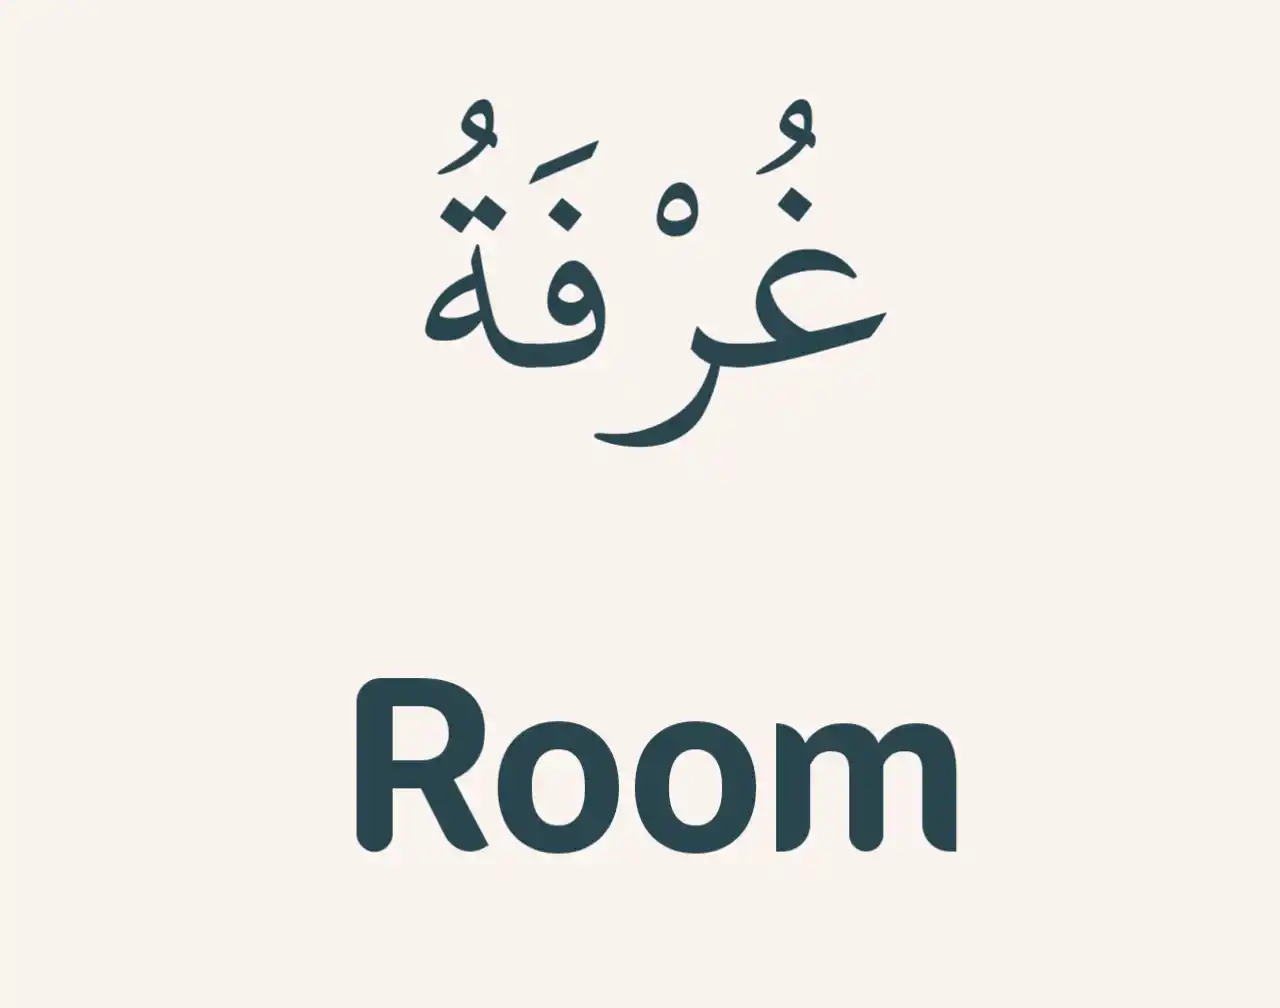 Room in Arabic